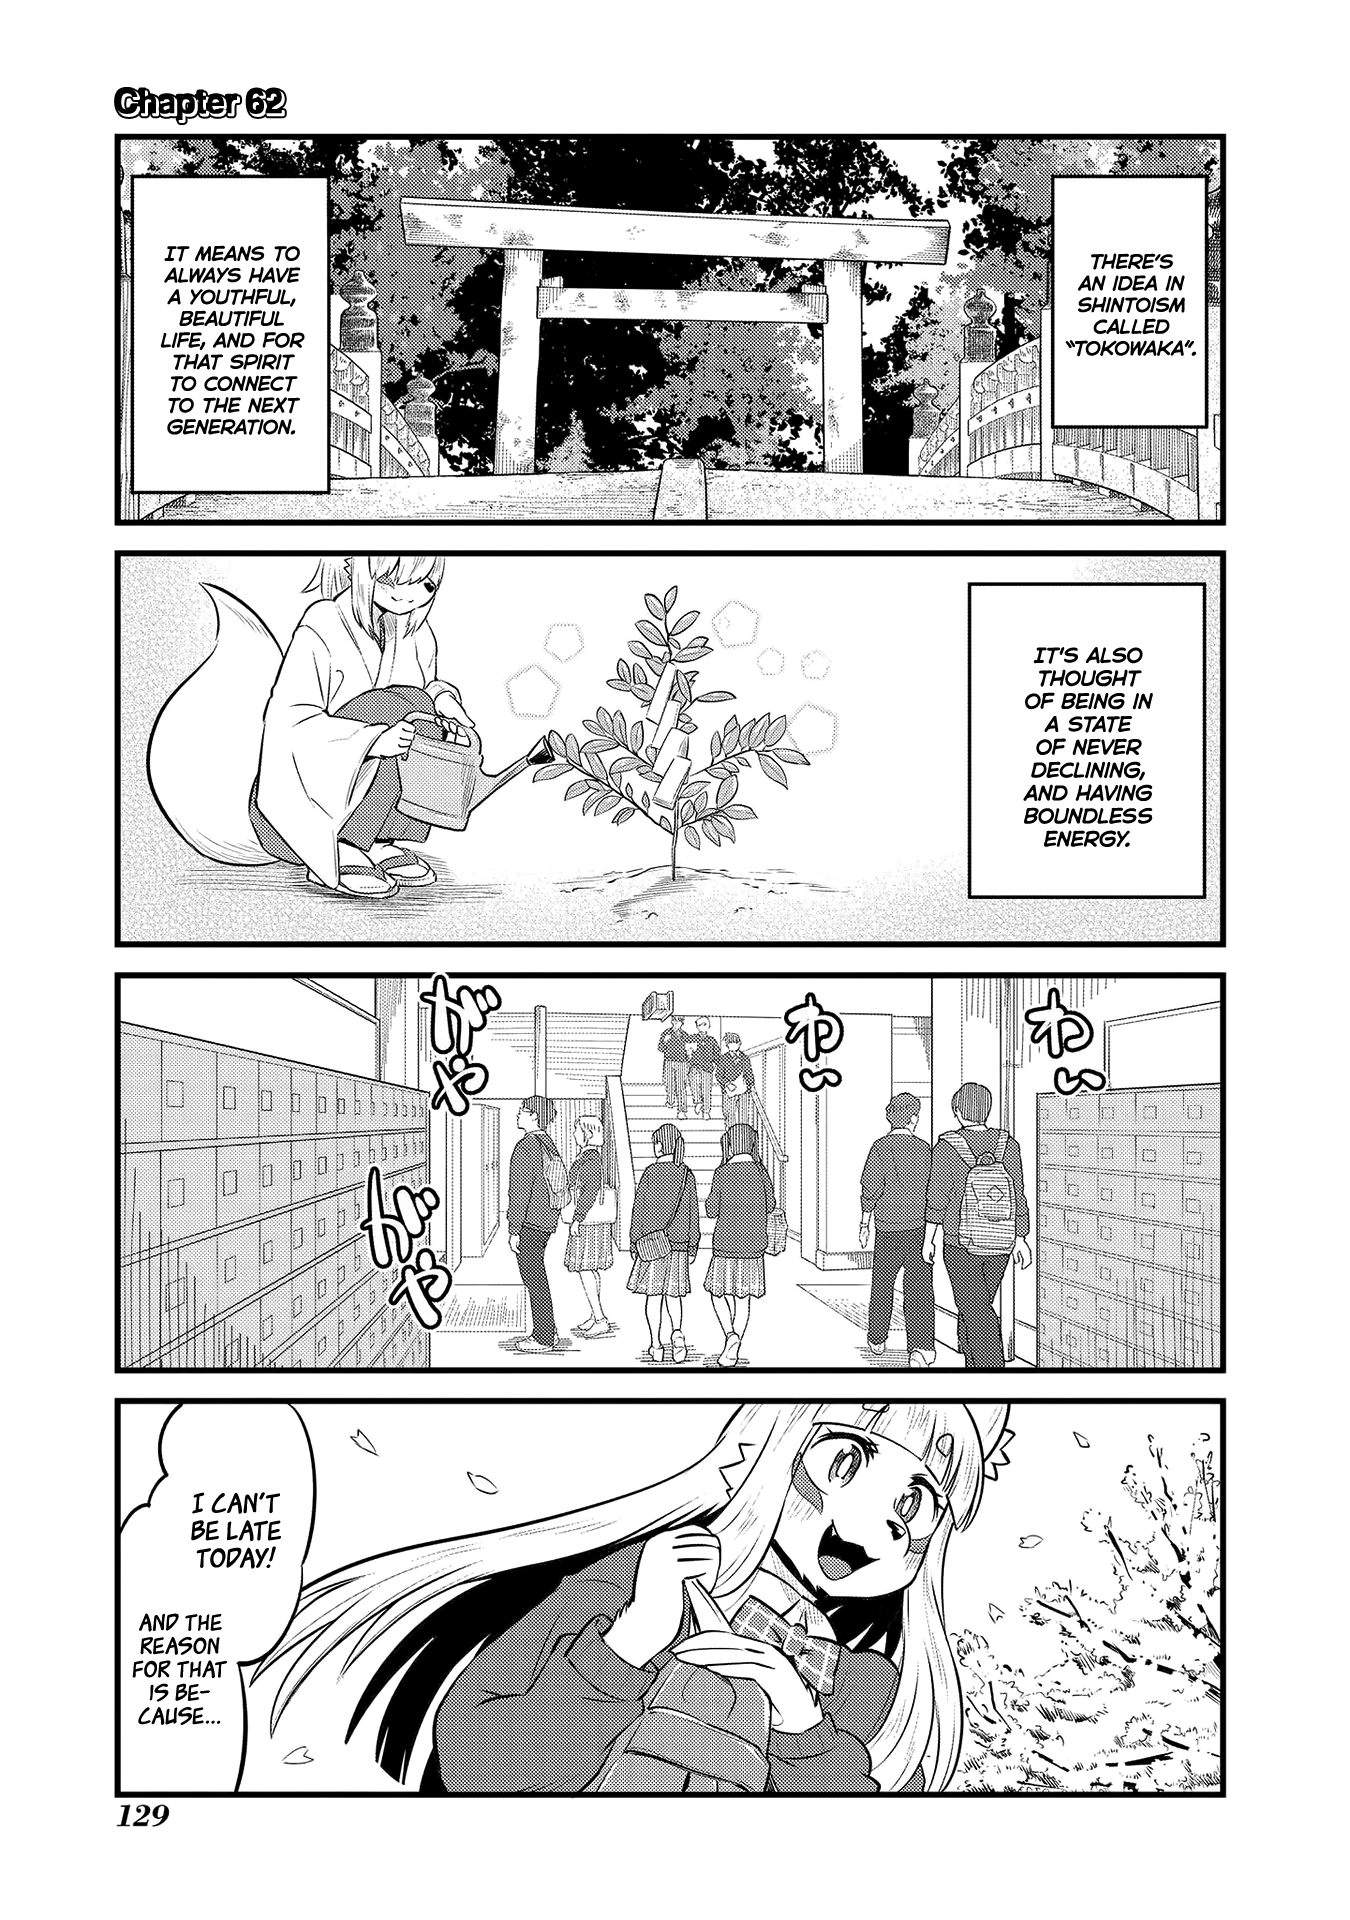 High School Inari Tamamo-Chan! - Page 1